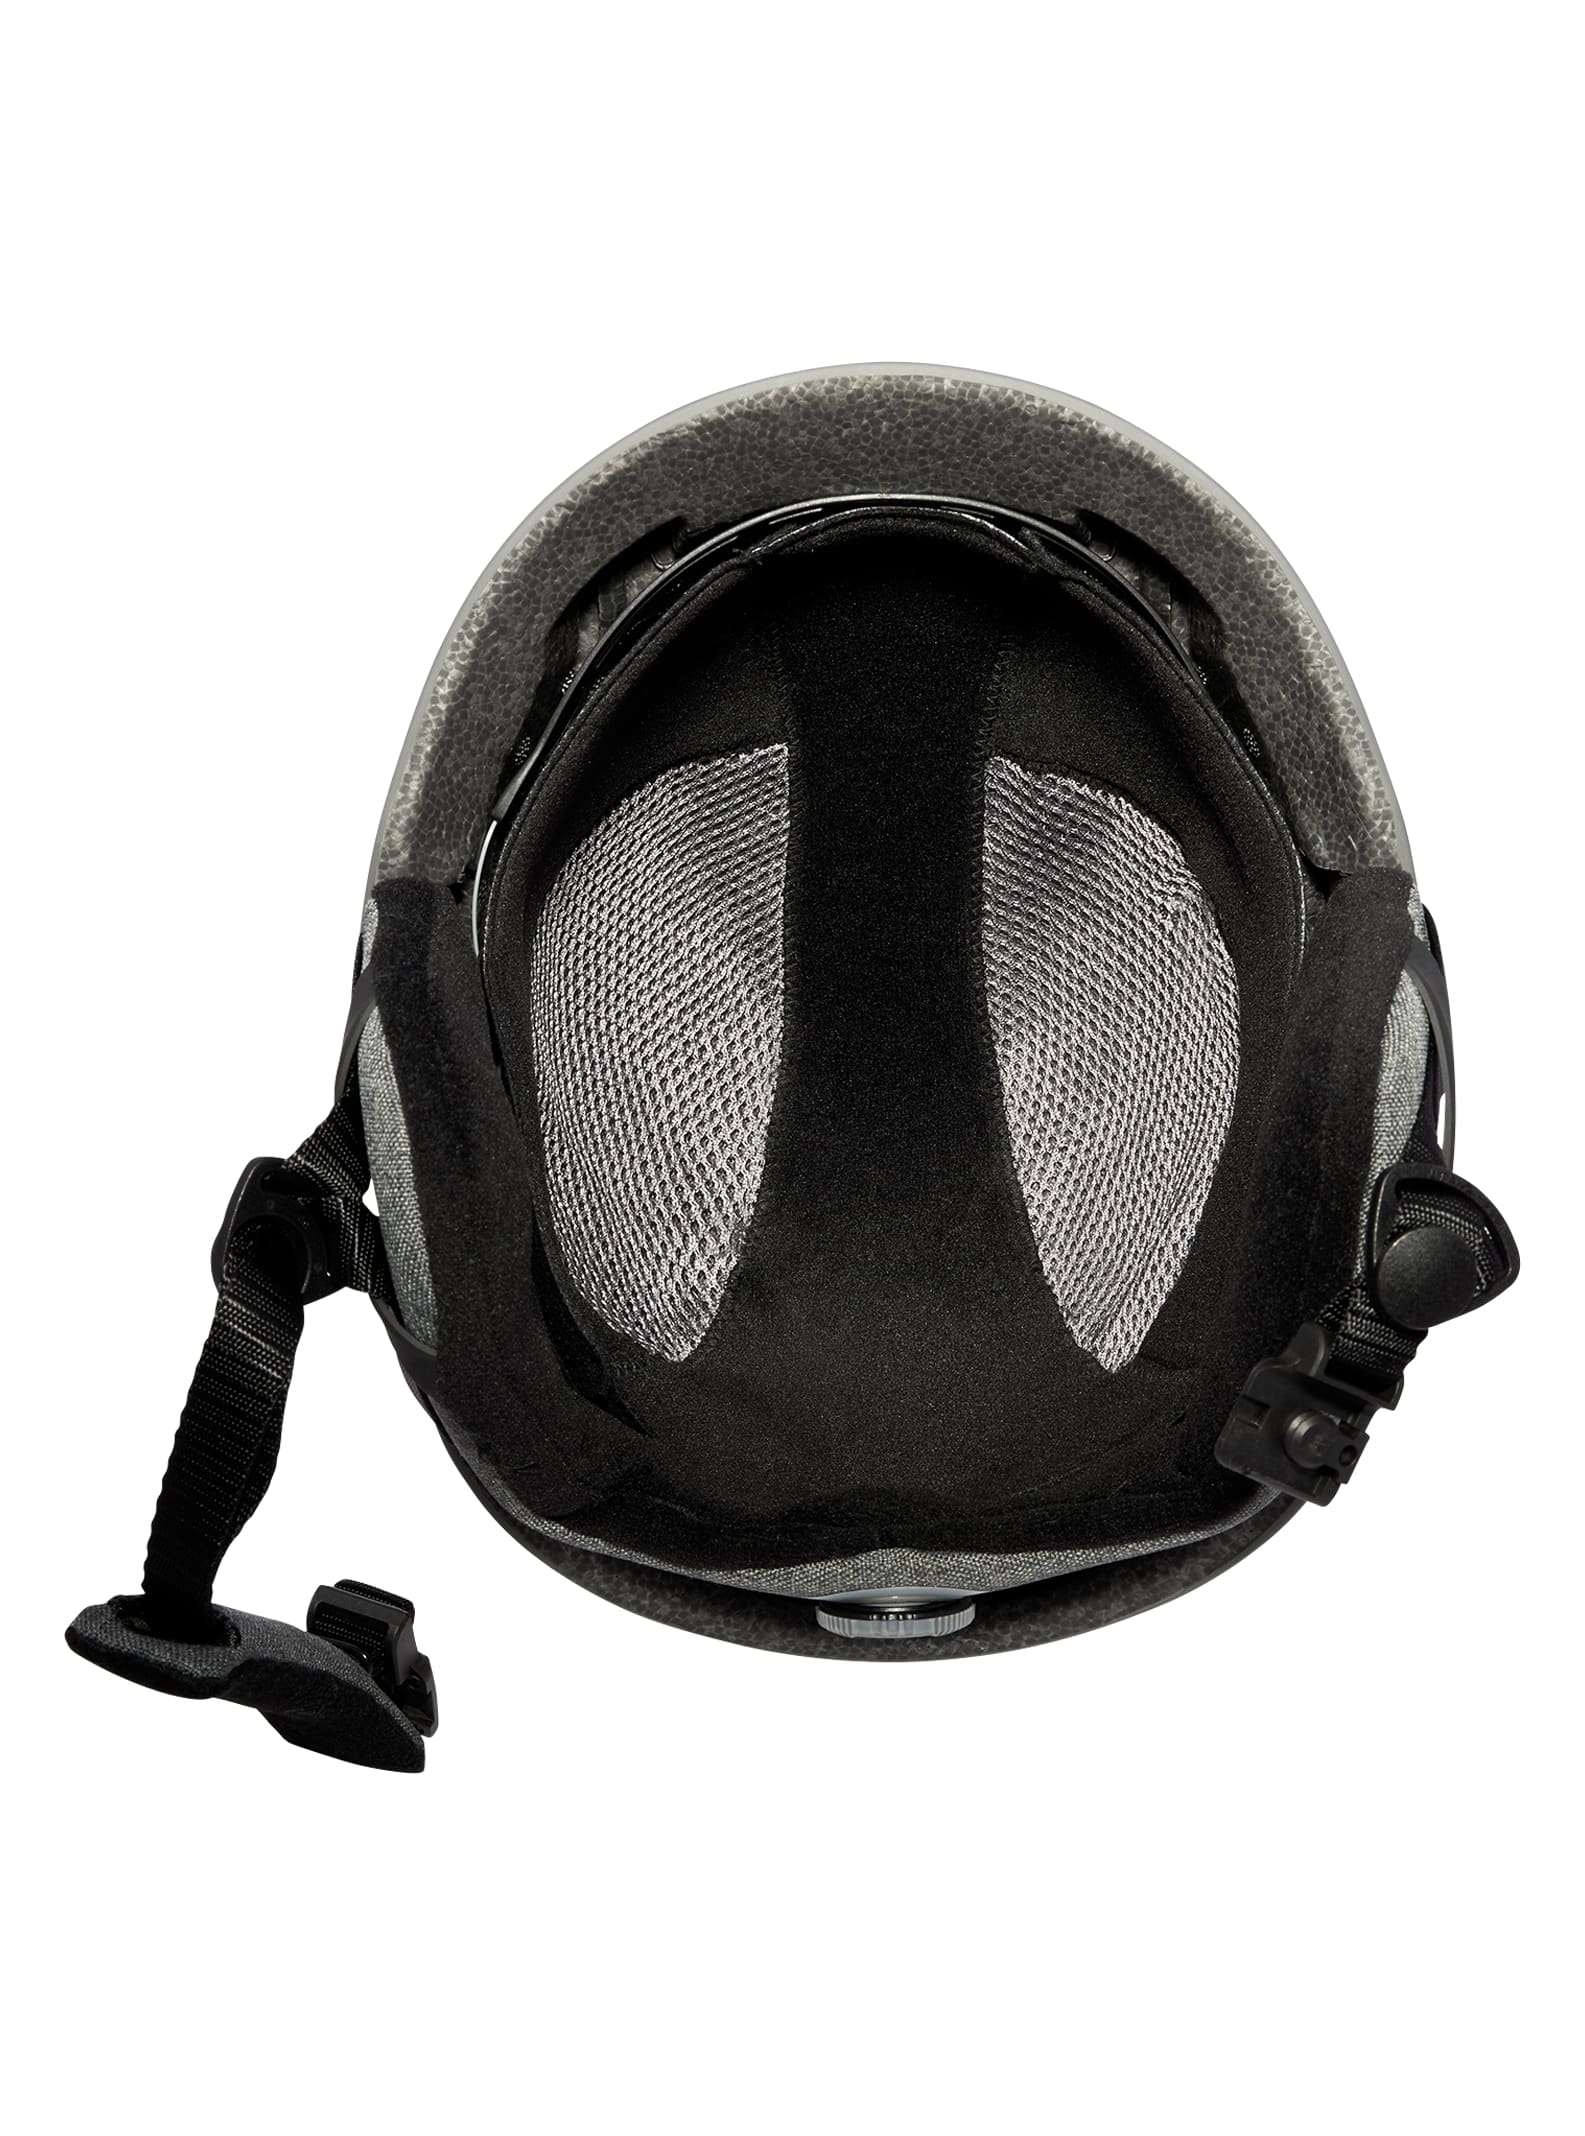 Rodan MIPS® Ski & Snowboard Helmet